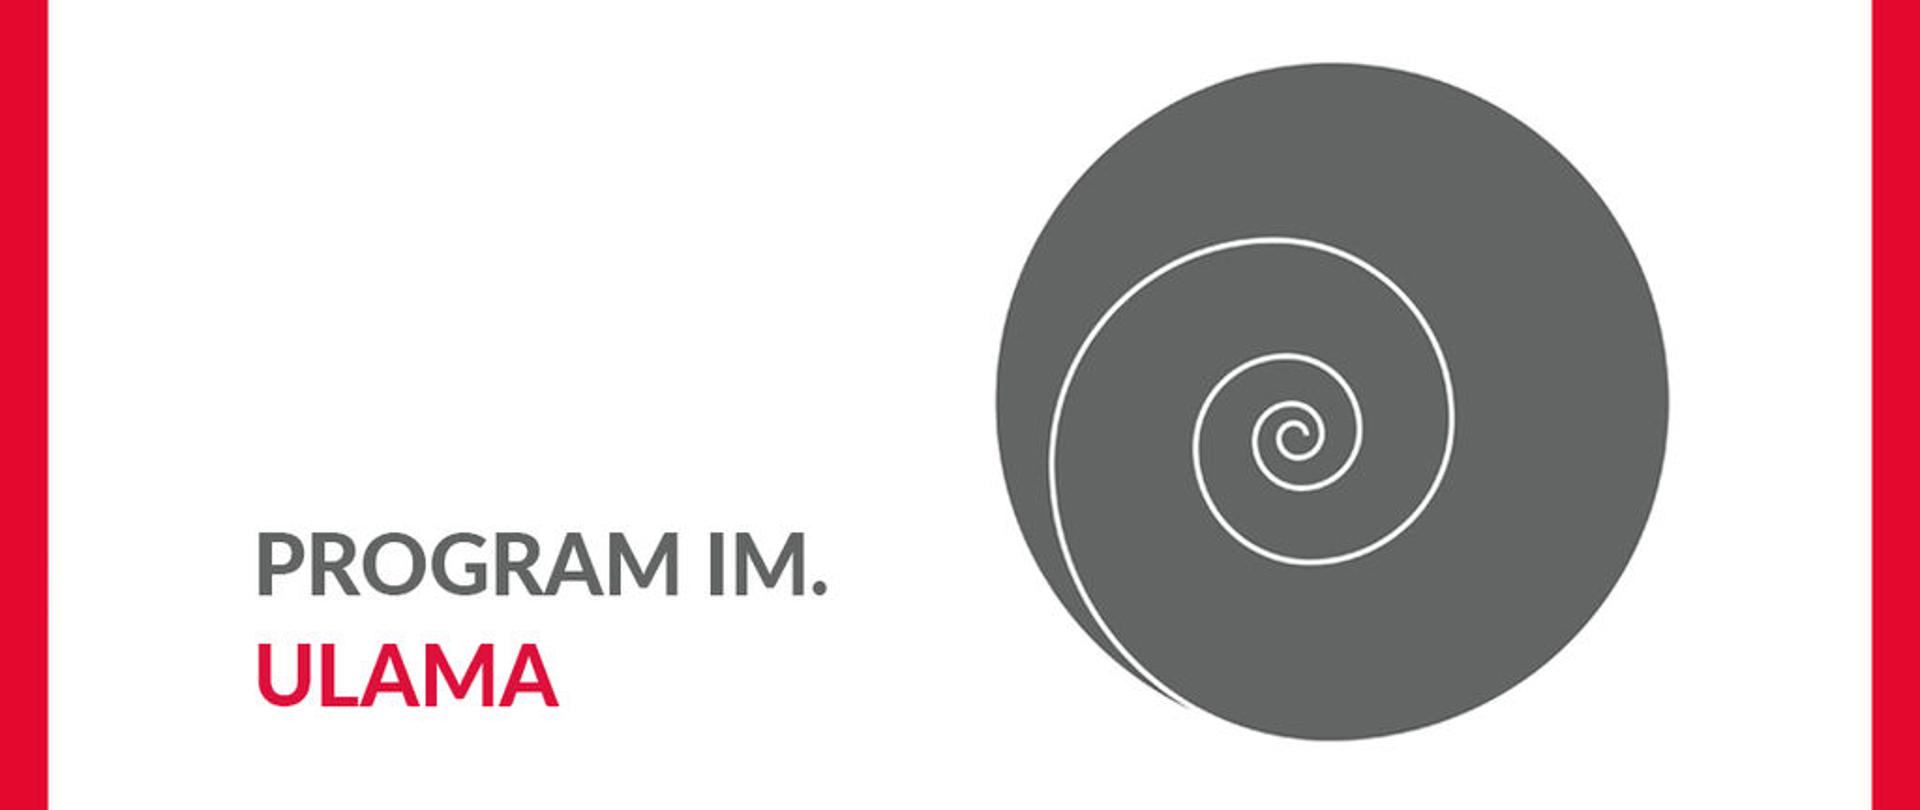 Logo programu - szara spirala i napis Program im. Ulama